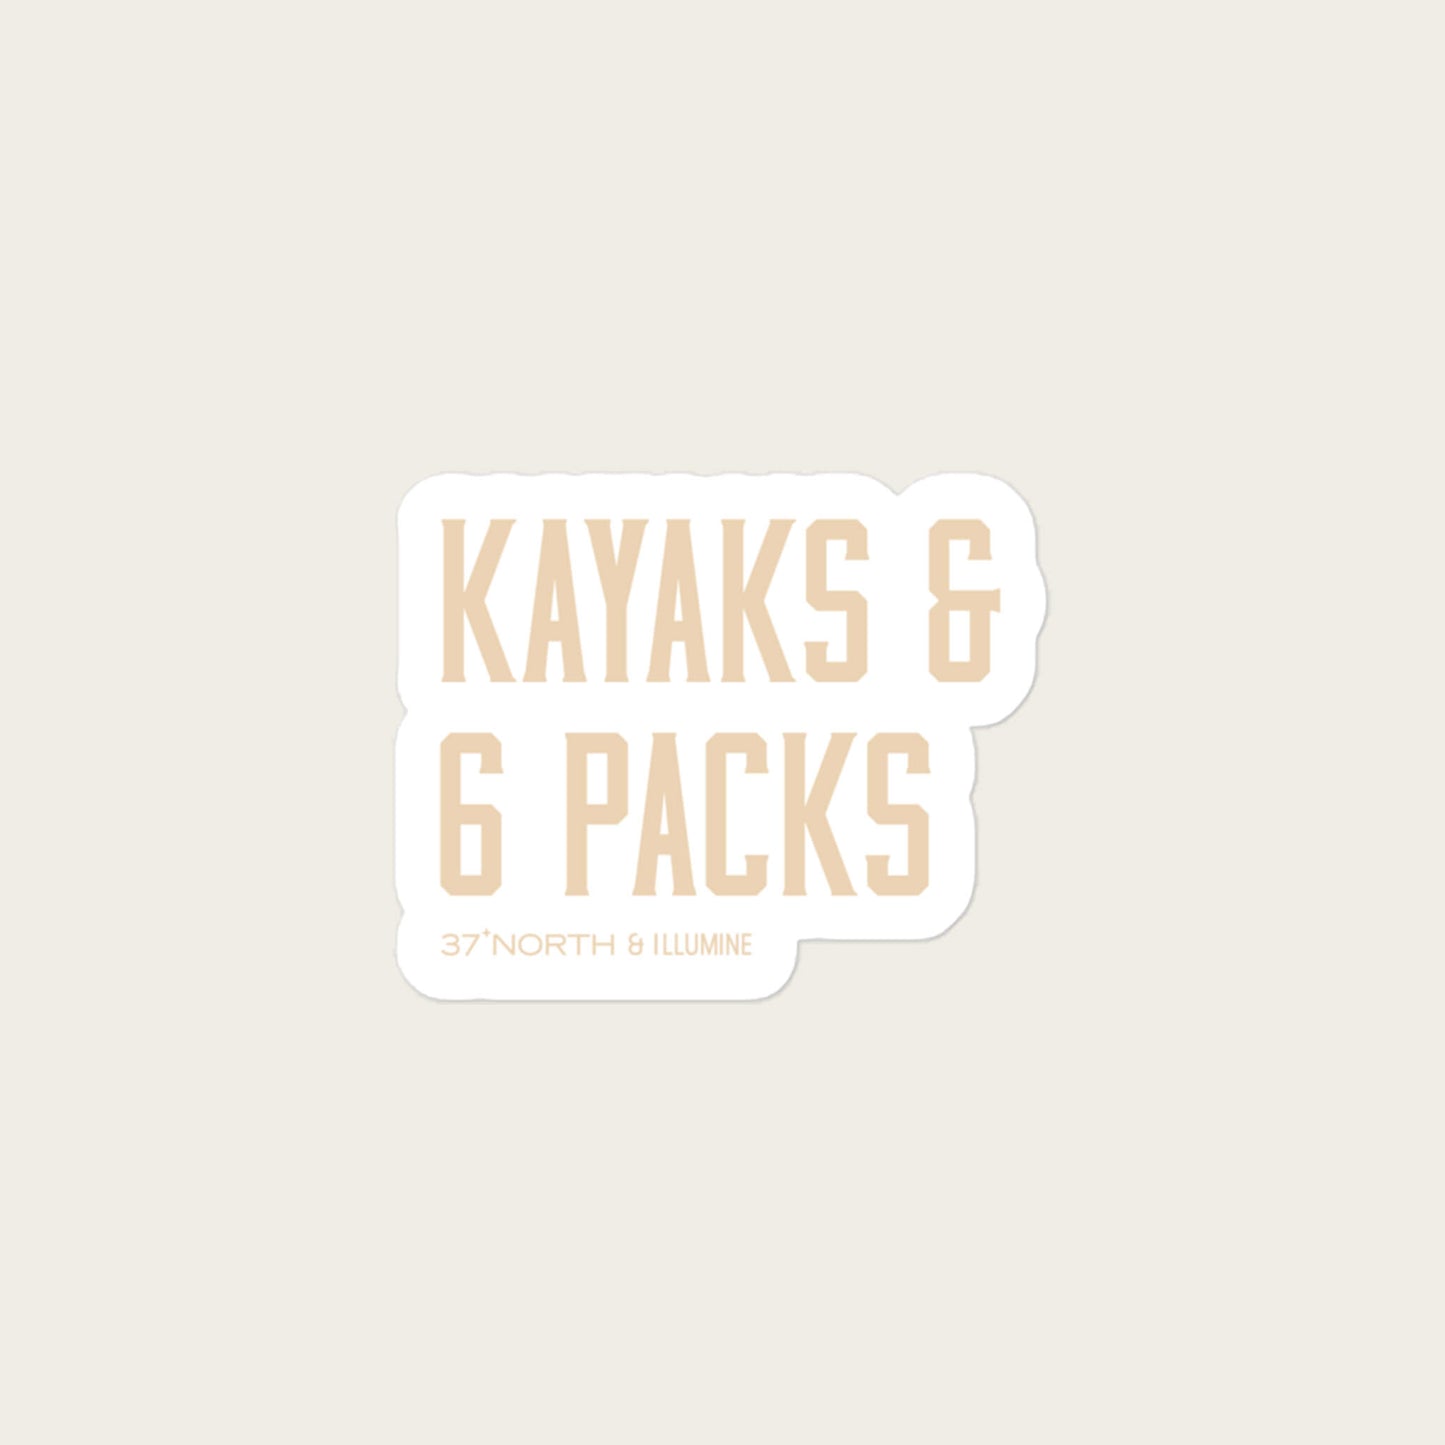 Kayaks & 6 Packs Sticker